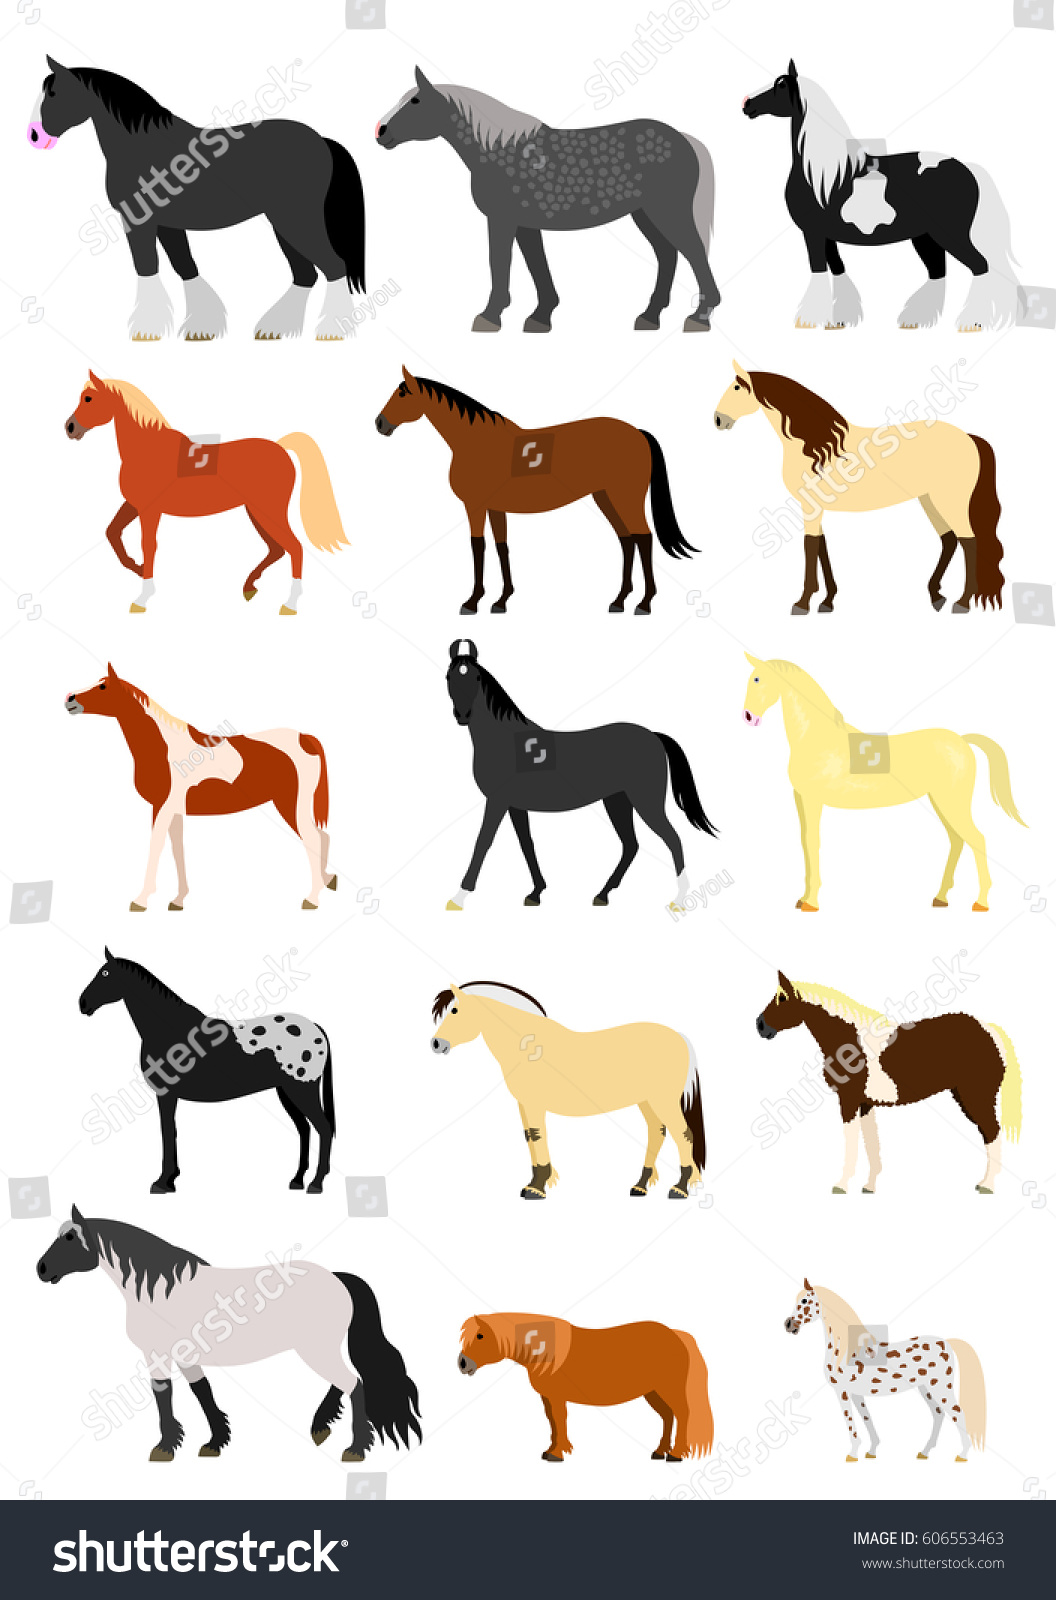 1 Basikir Horse Images, Stock Photos & Vectors | Shutterstock